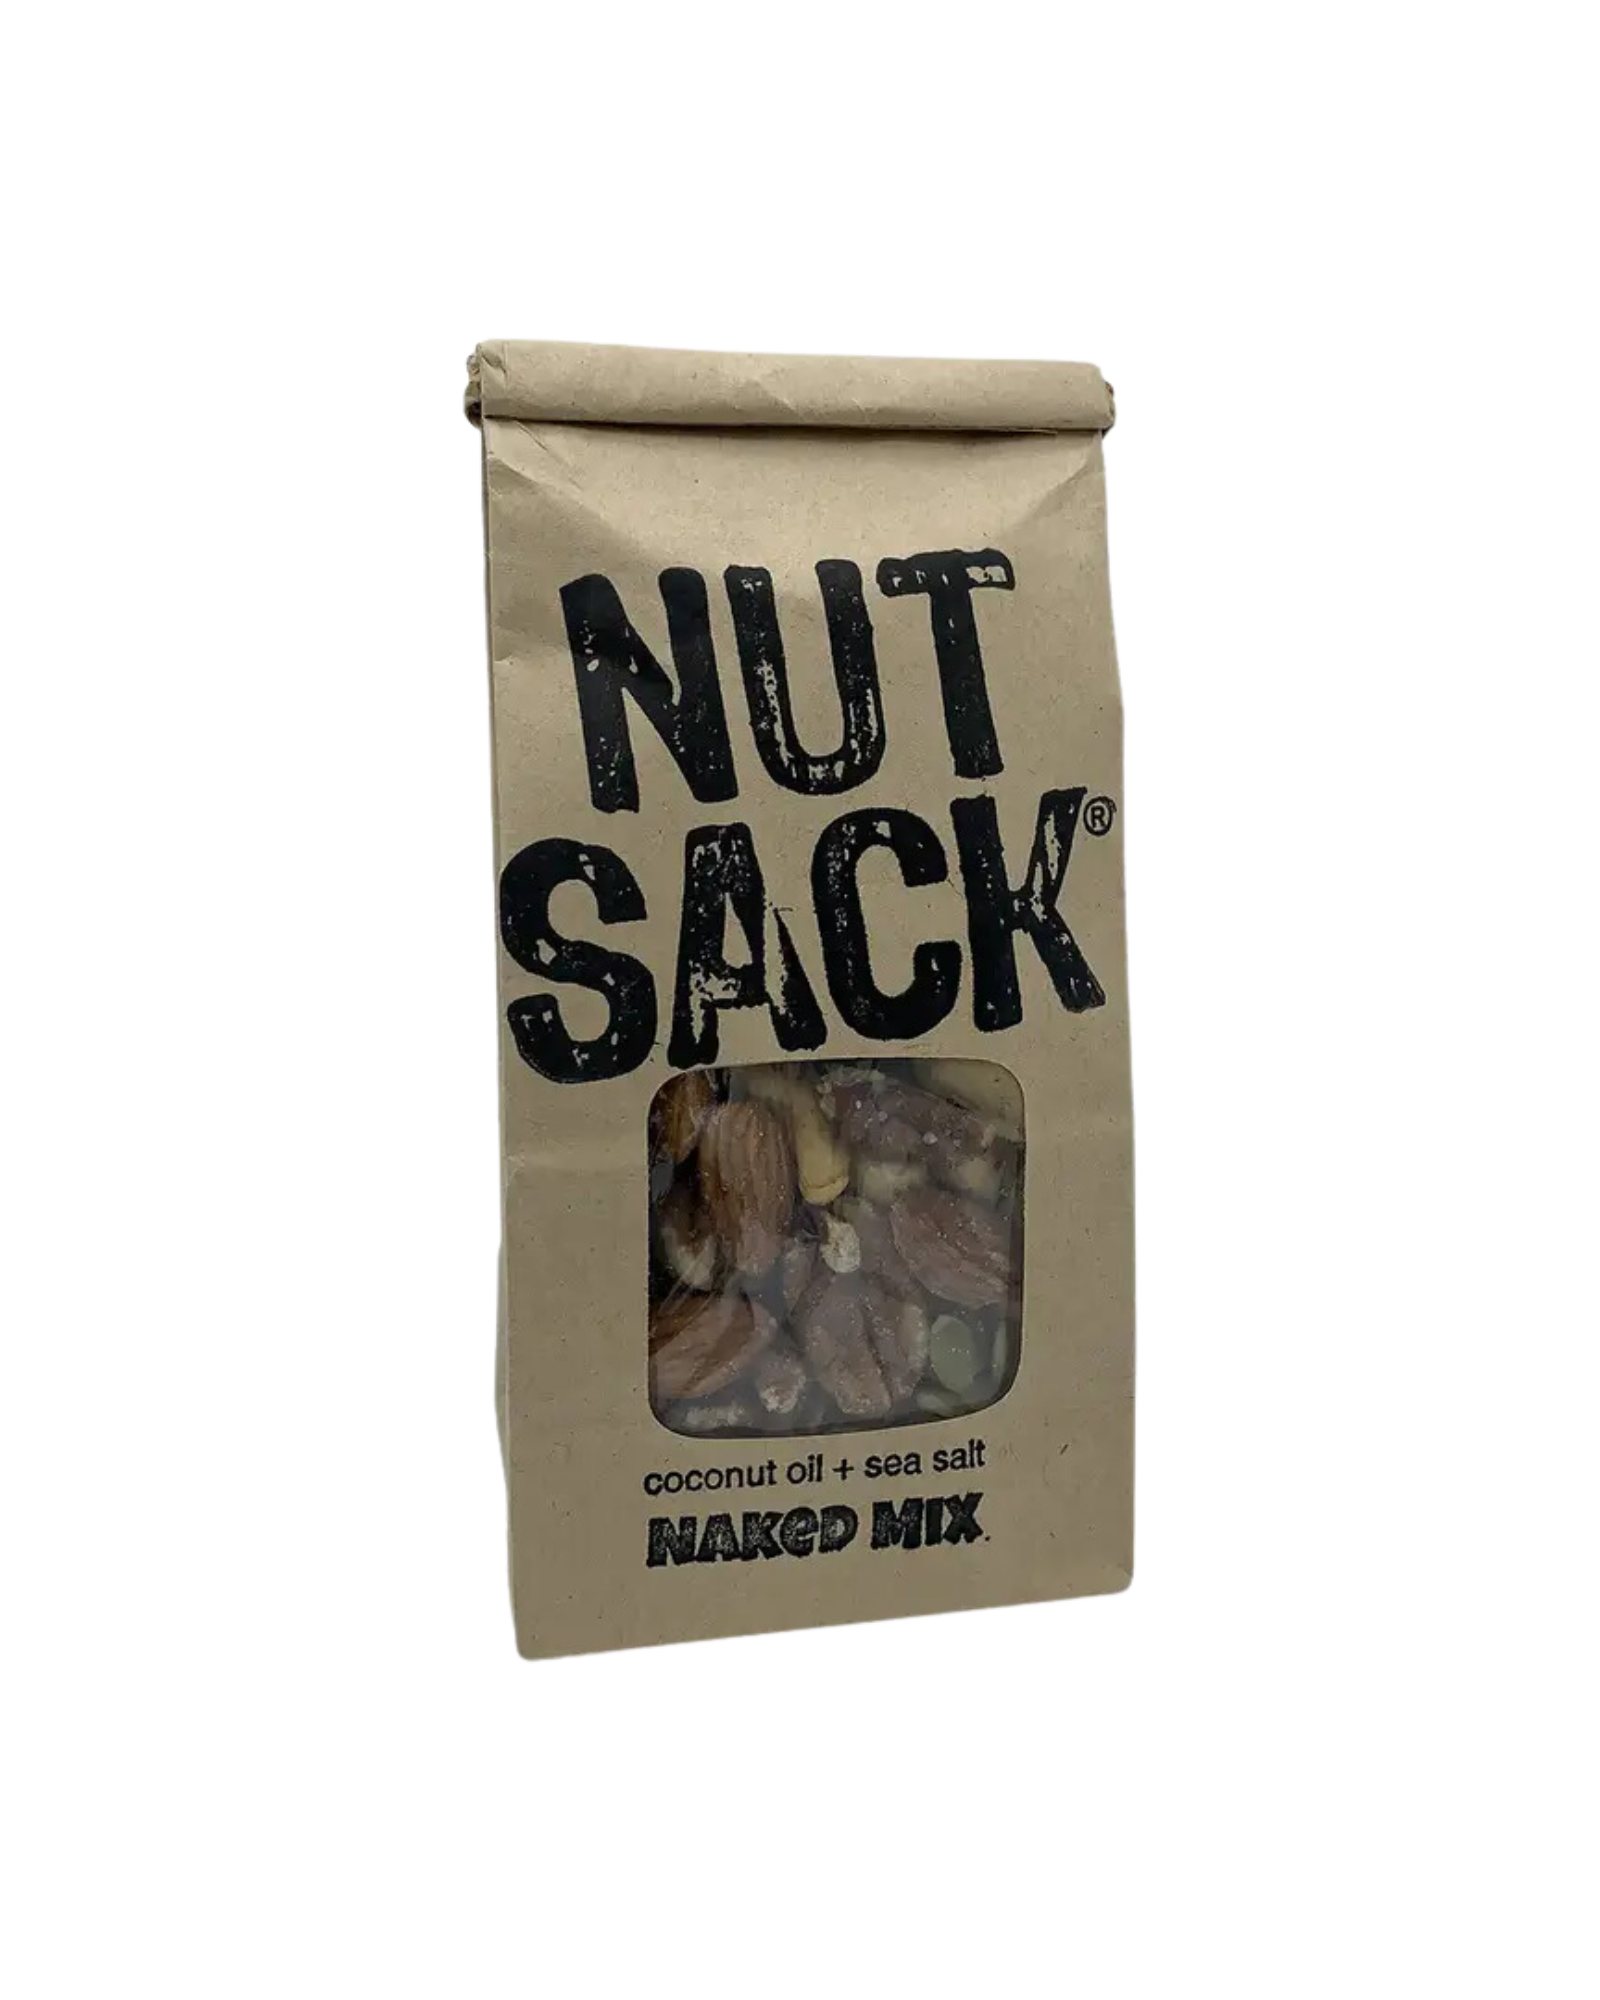 Naked Mix - Roasted Nuts